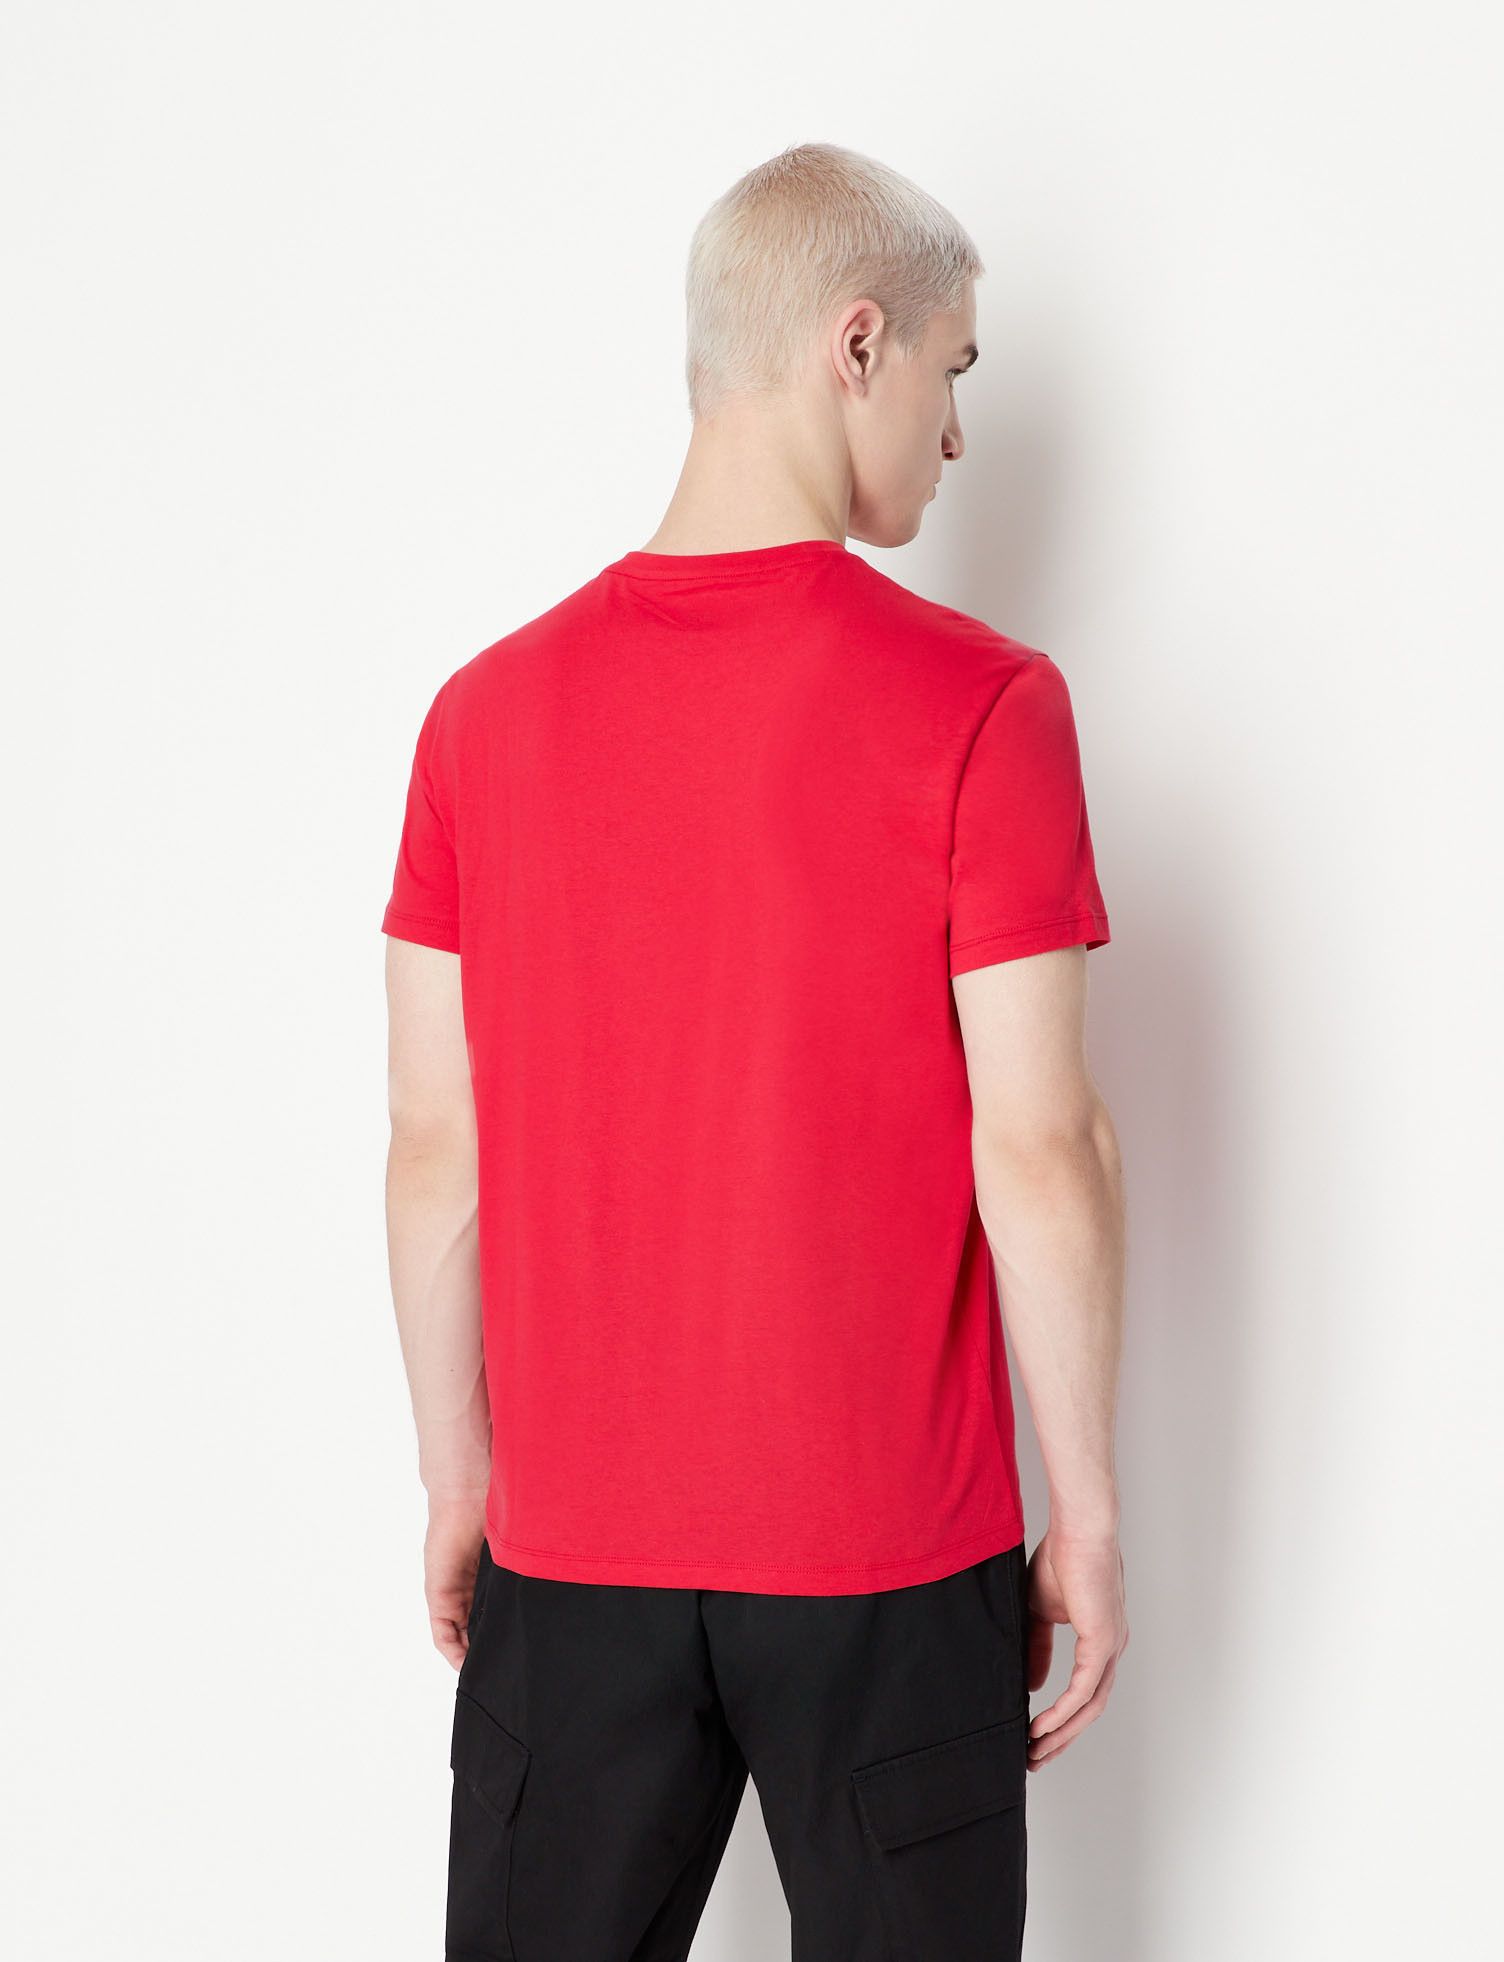 Armani Exchange - T-shirt con stampa logo regular fit, Rosso, large image number 2